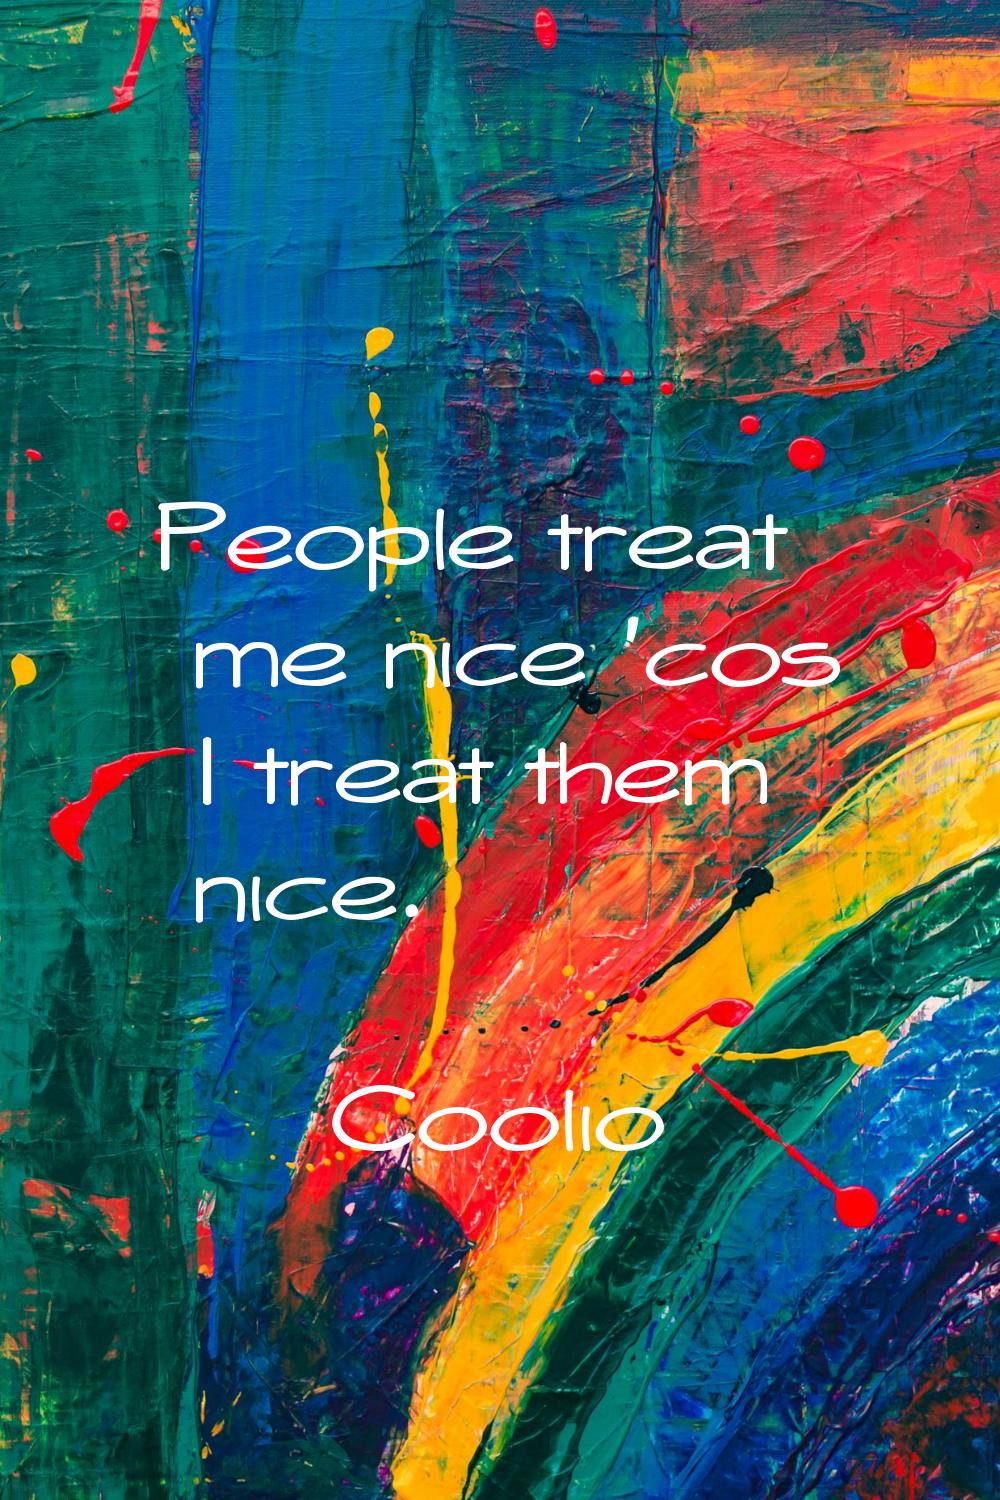 People treat me nice 'cos I treat them nice.